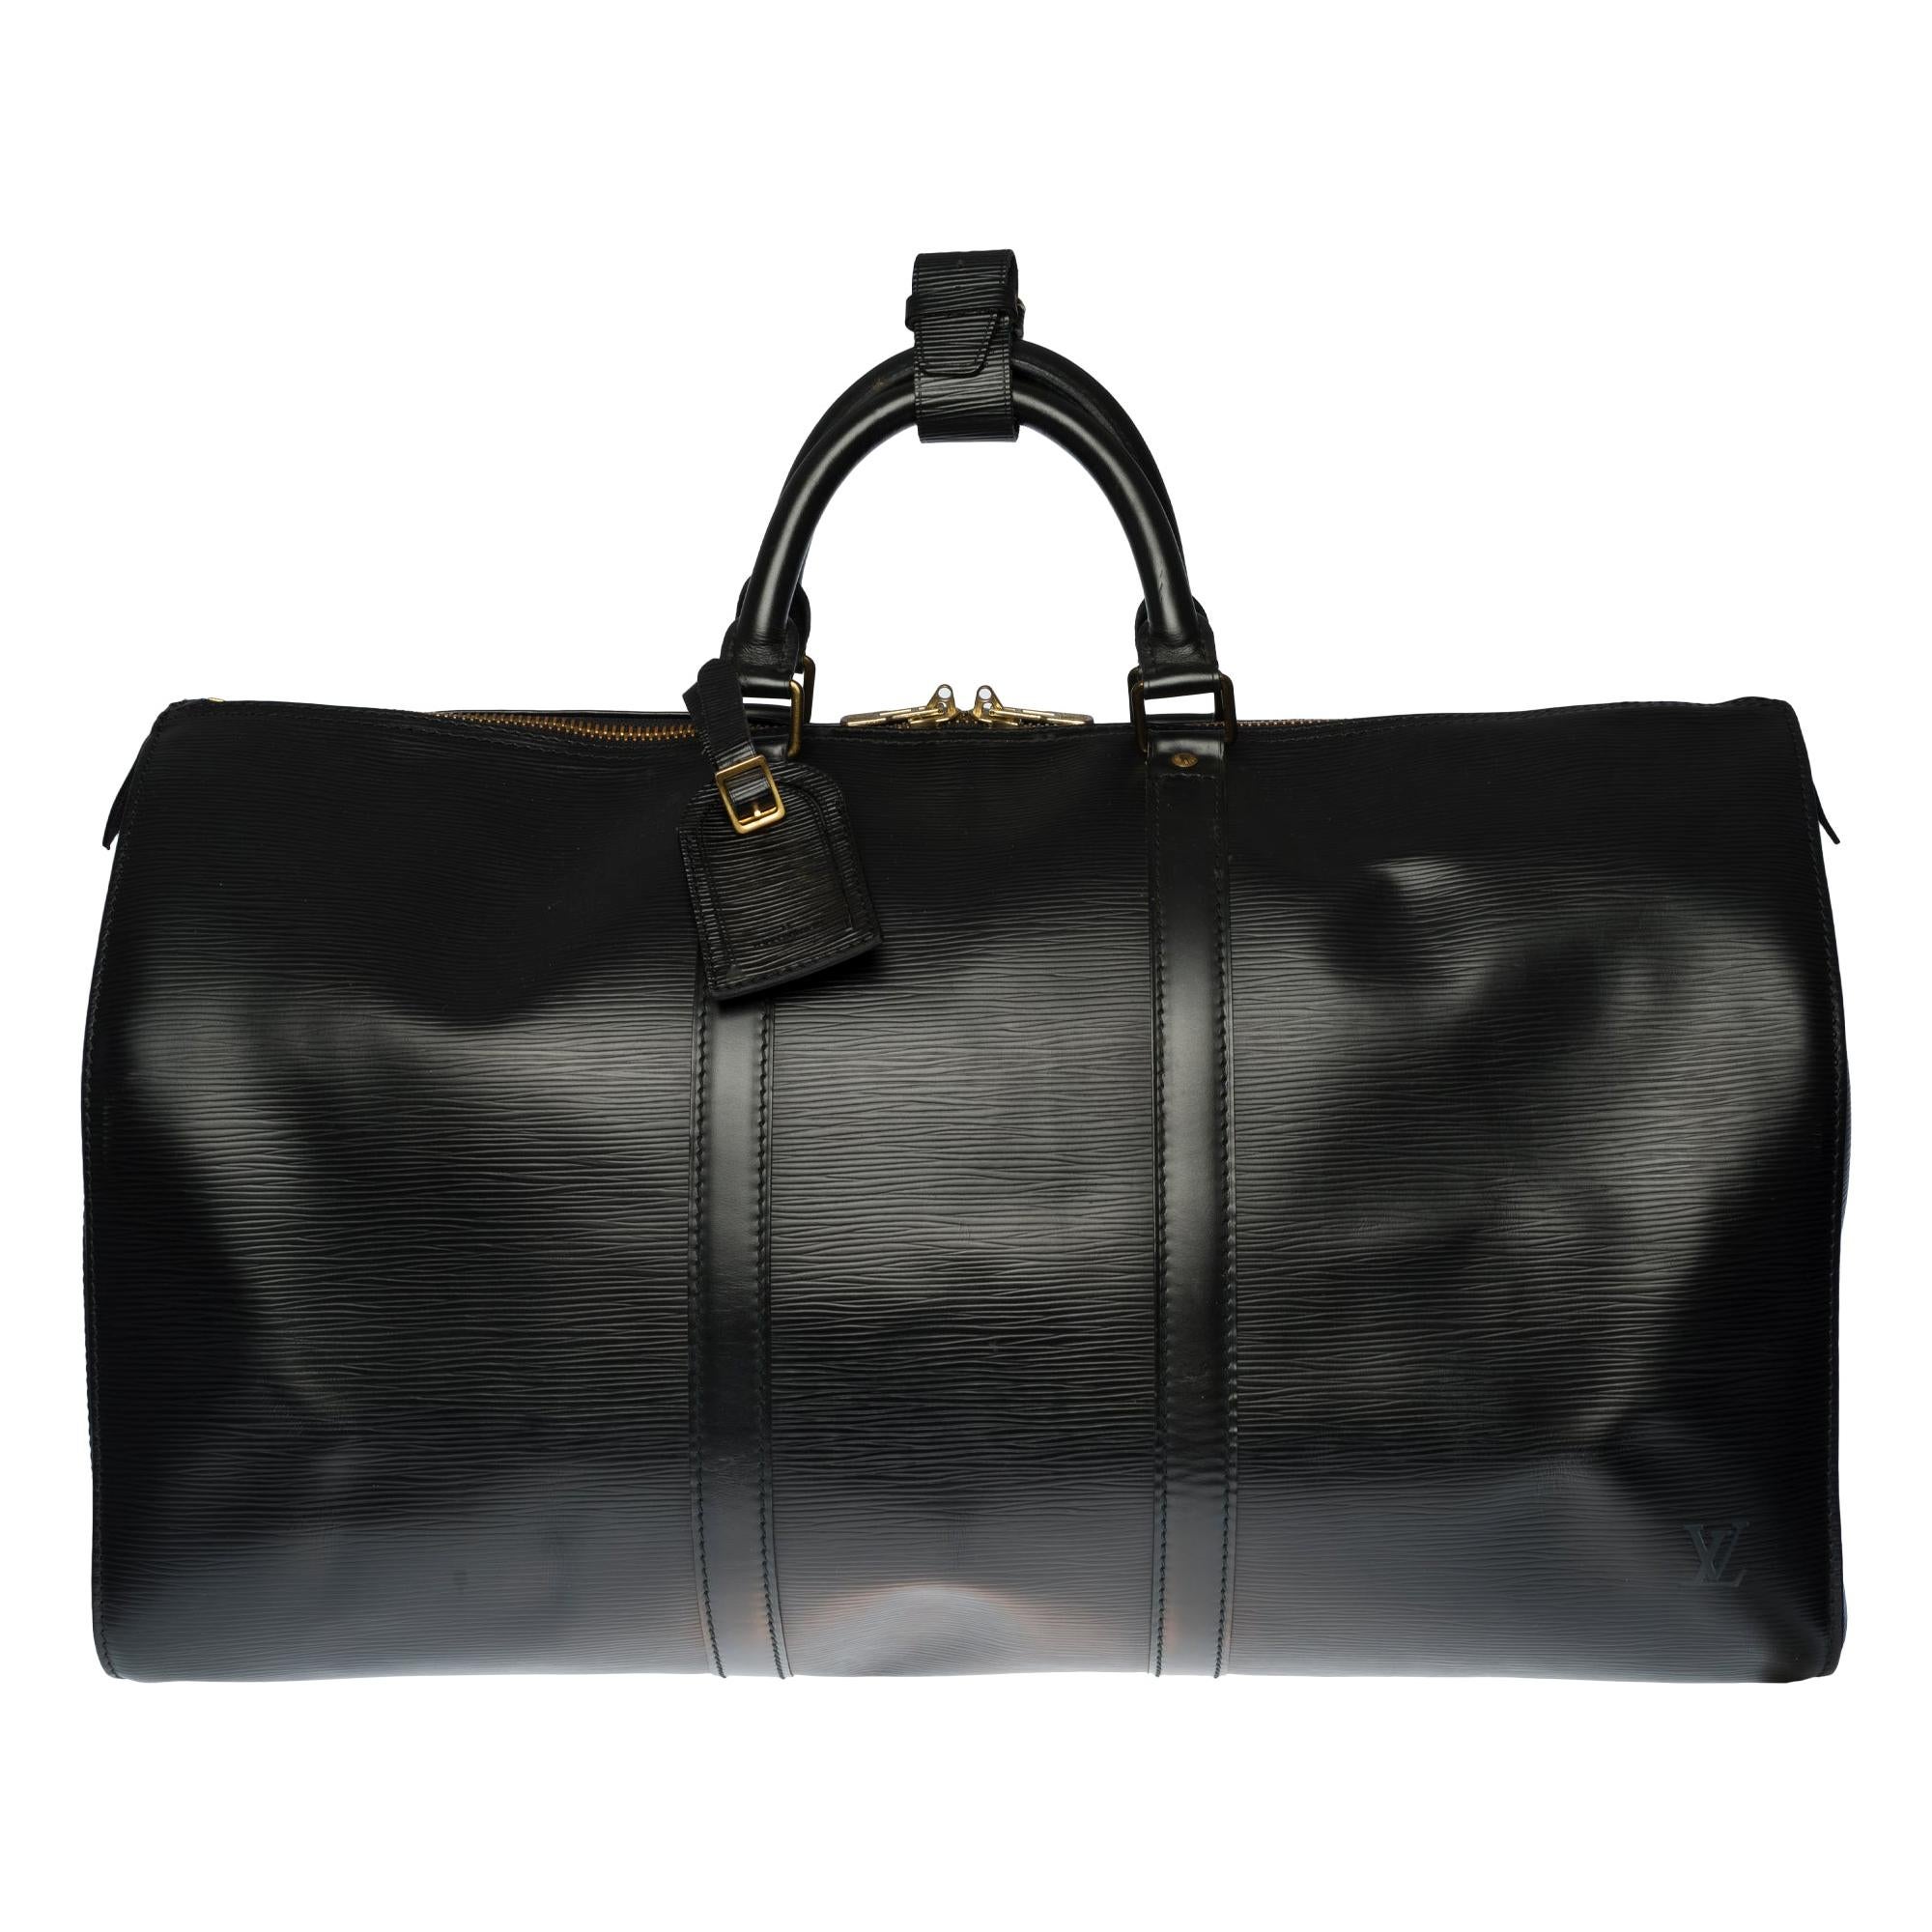 Louis Vuitton Keepall 50 Travel bag in black épi leather